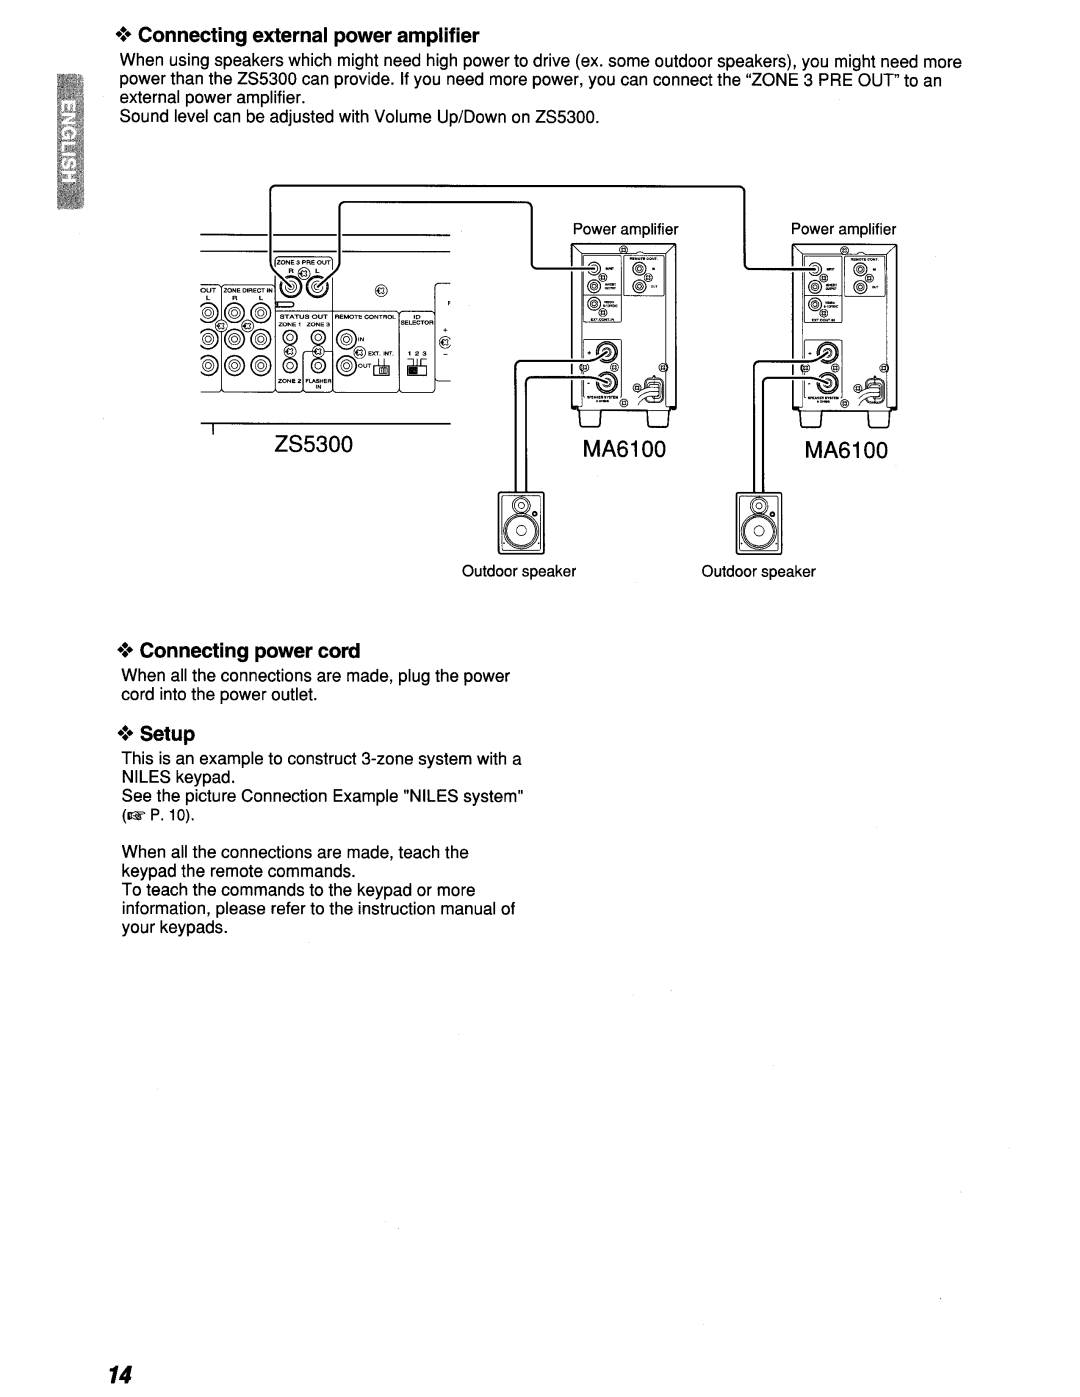 Marantz ZS5300 manual Z85300, MA6100, Connecting external power amplifier, Connecting power cord, Setup 